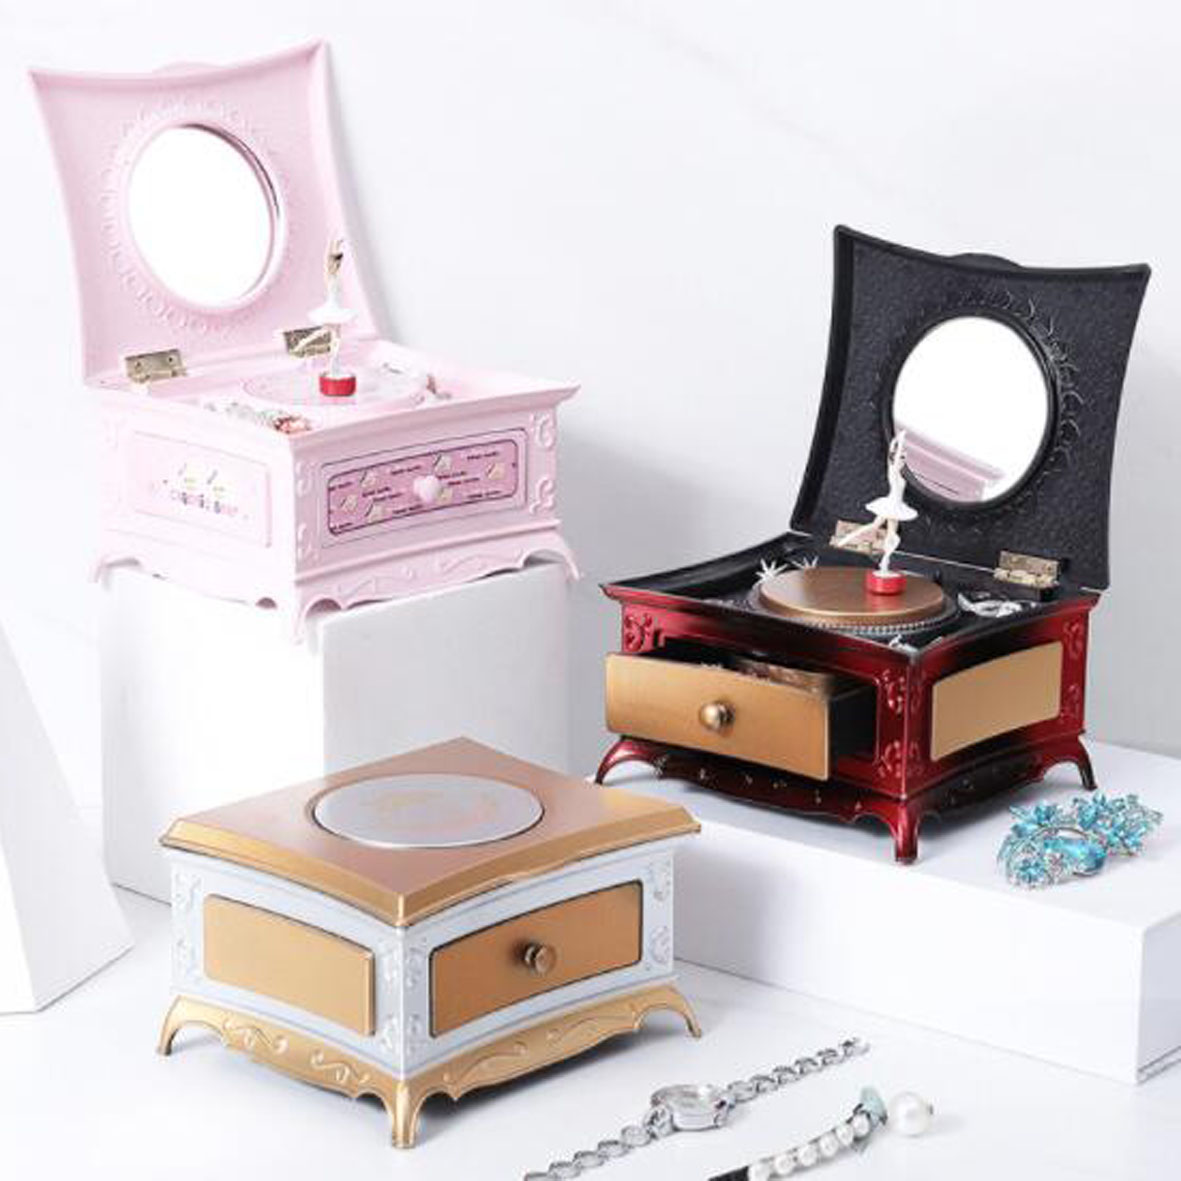 GL-AAA1515 Jewelry Music Box with a Dancing Ballerina Inside